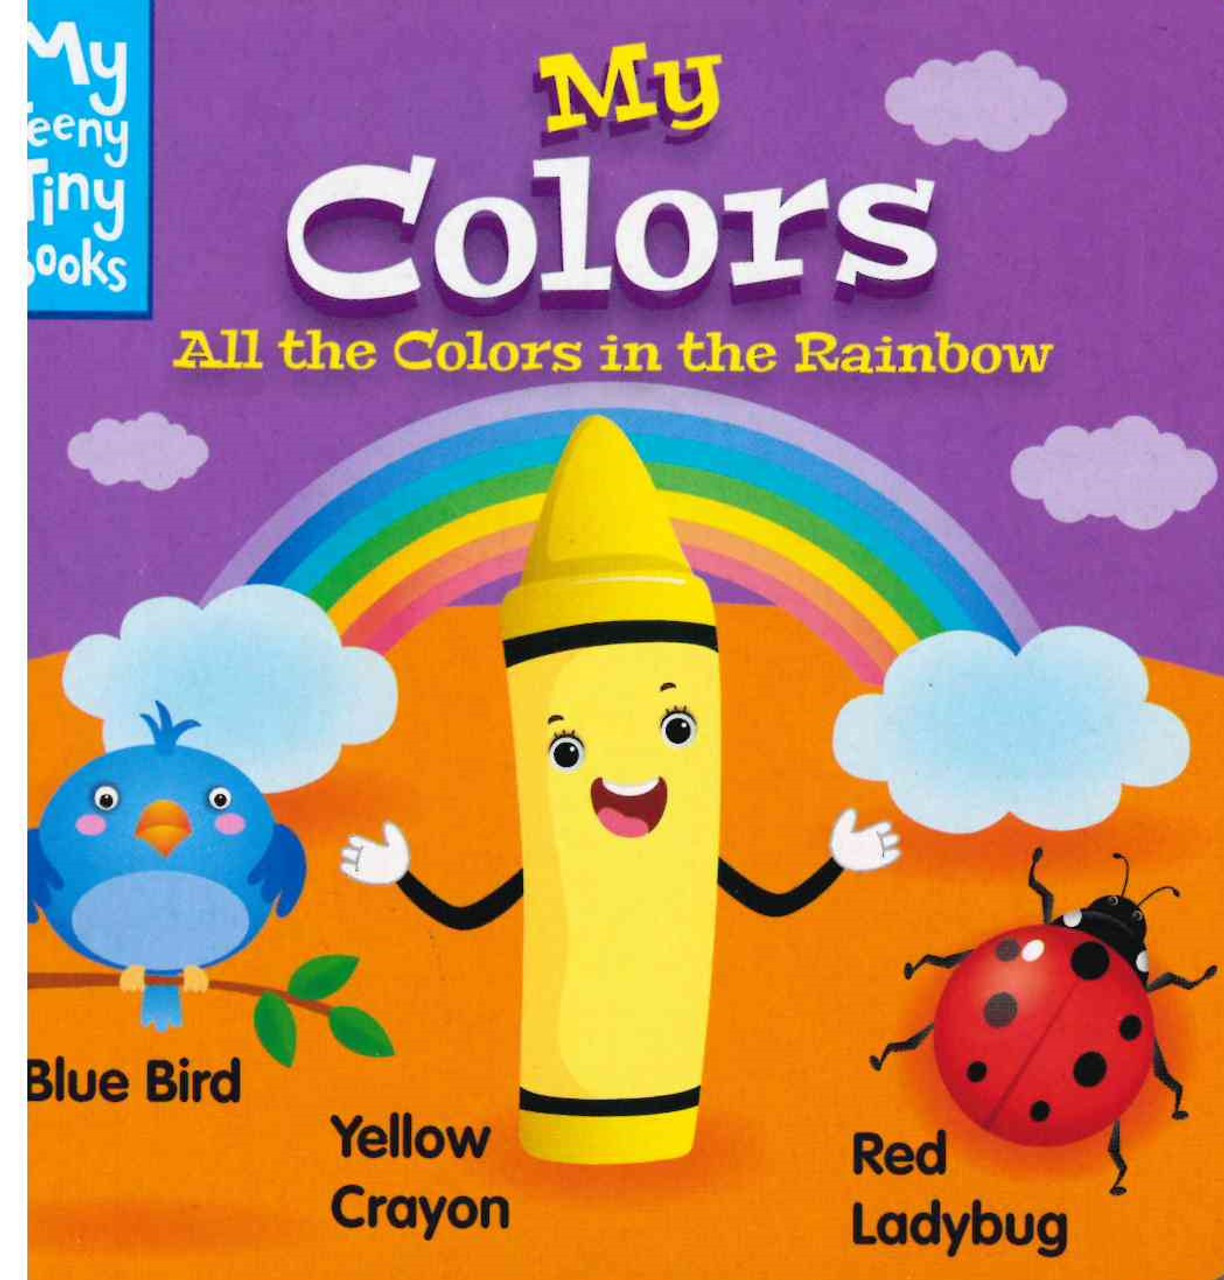 Multicolored Worm Animal Coloring Crayons 